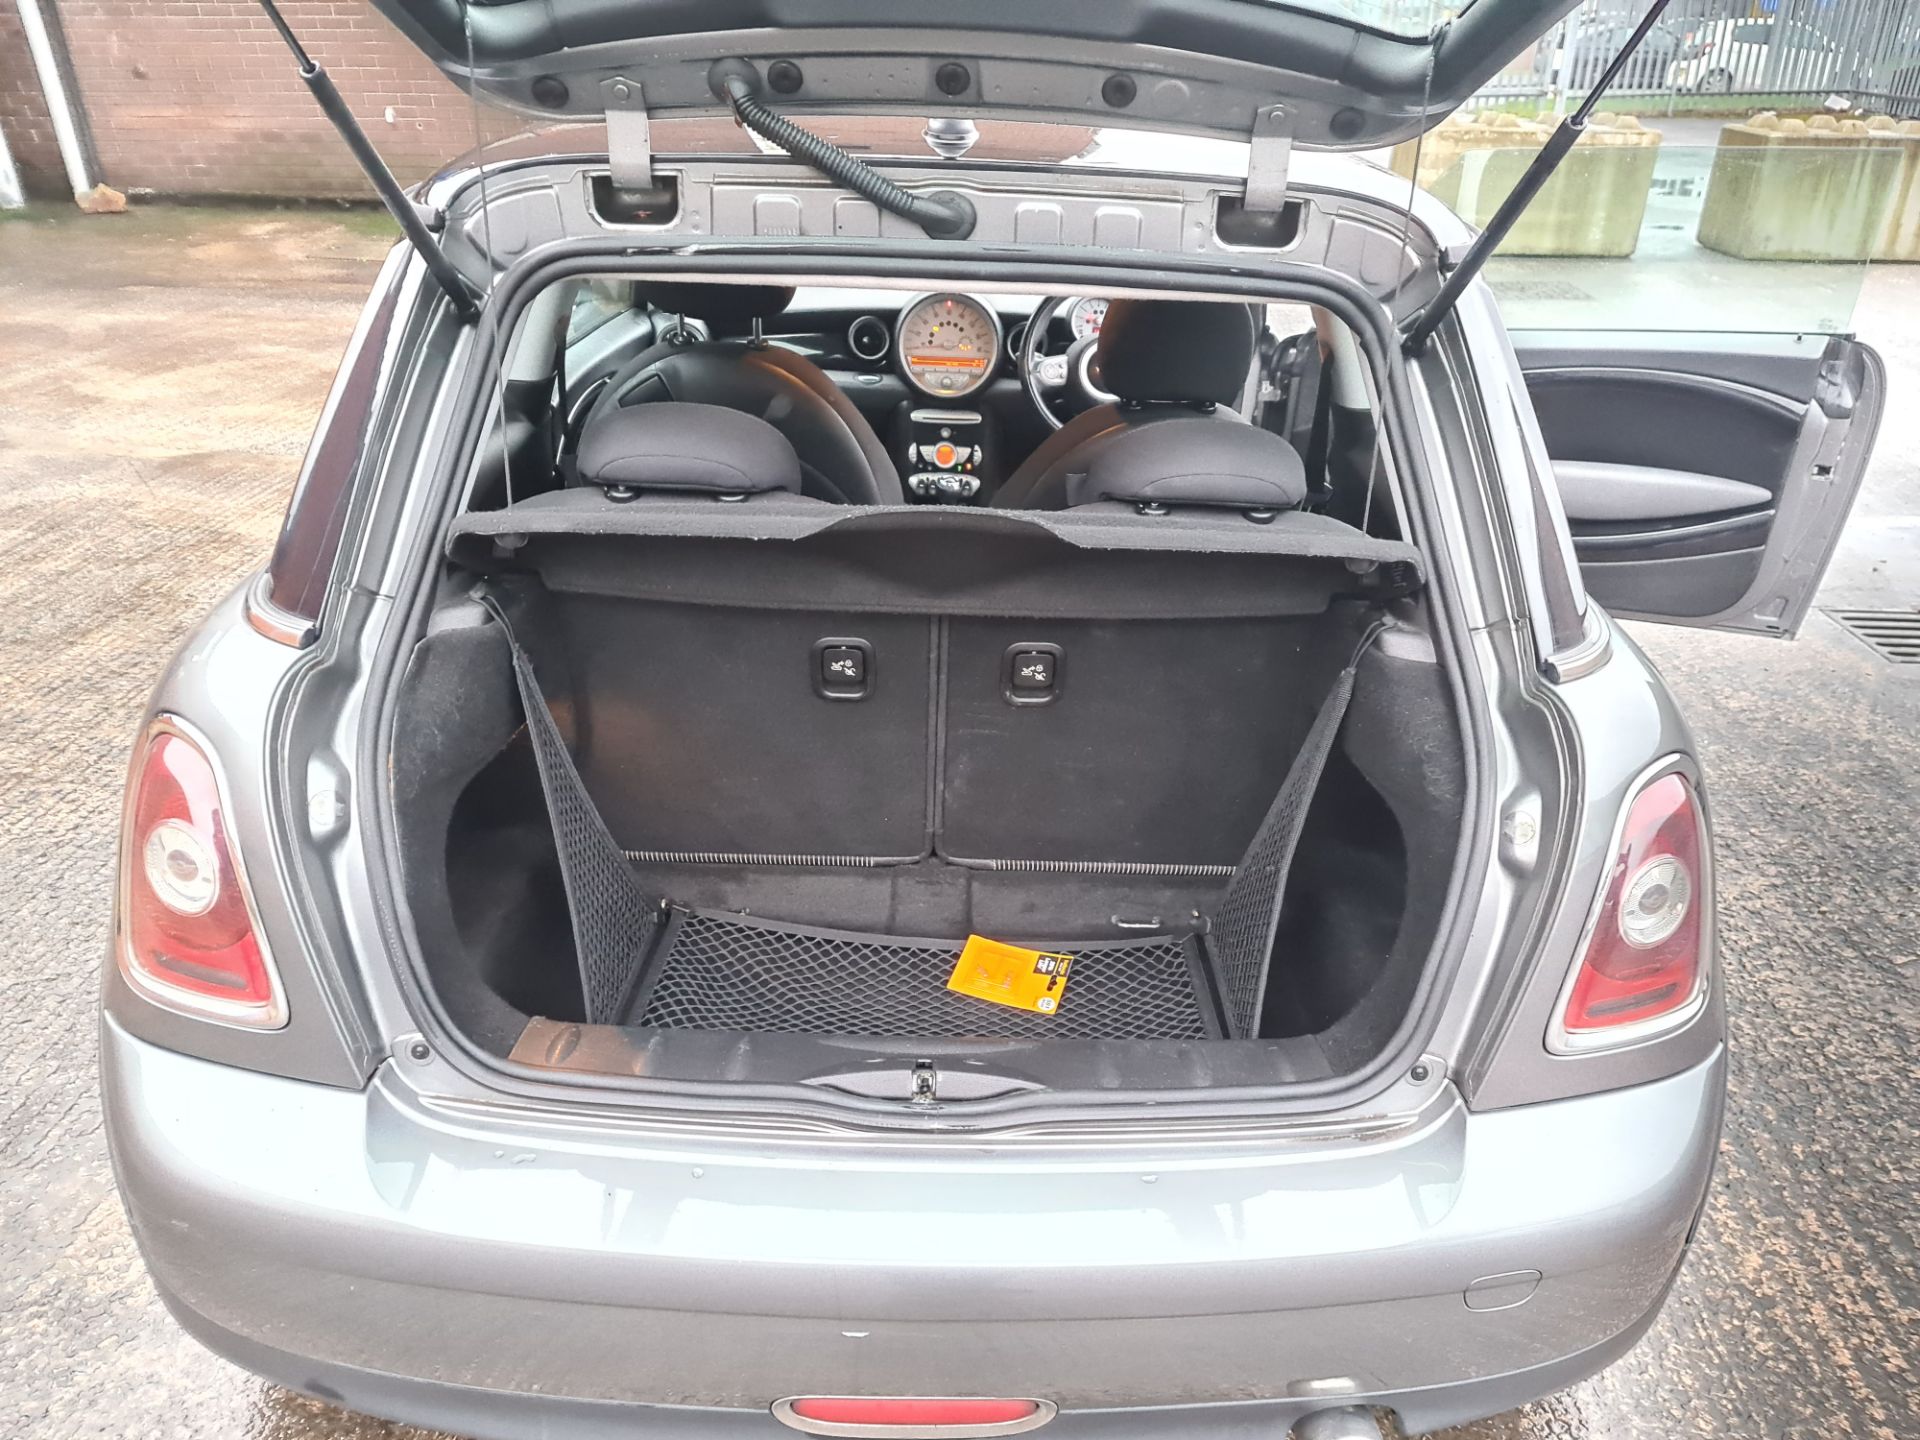 YE09 CDU Mini Cooper Graphite 3 door hatchback car, 6 speed manual gearbox, 1598cc petrol engine. C - Image 22 of 56